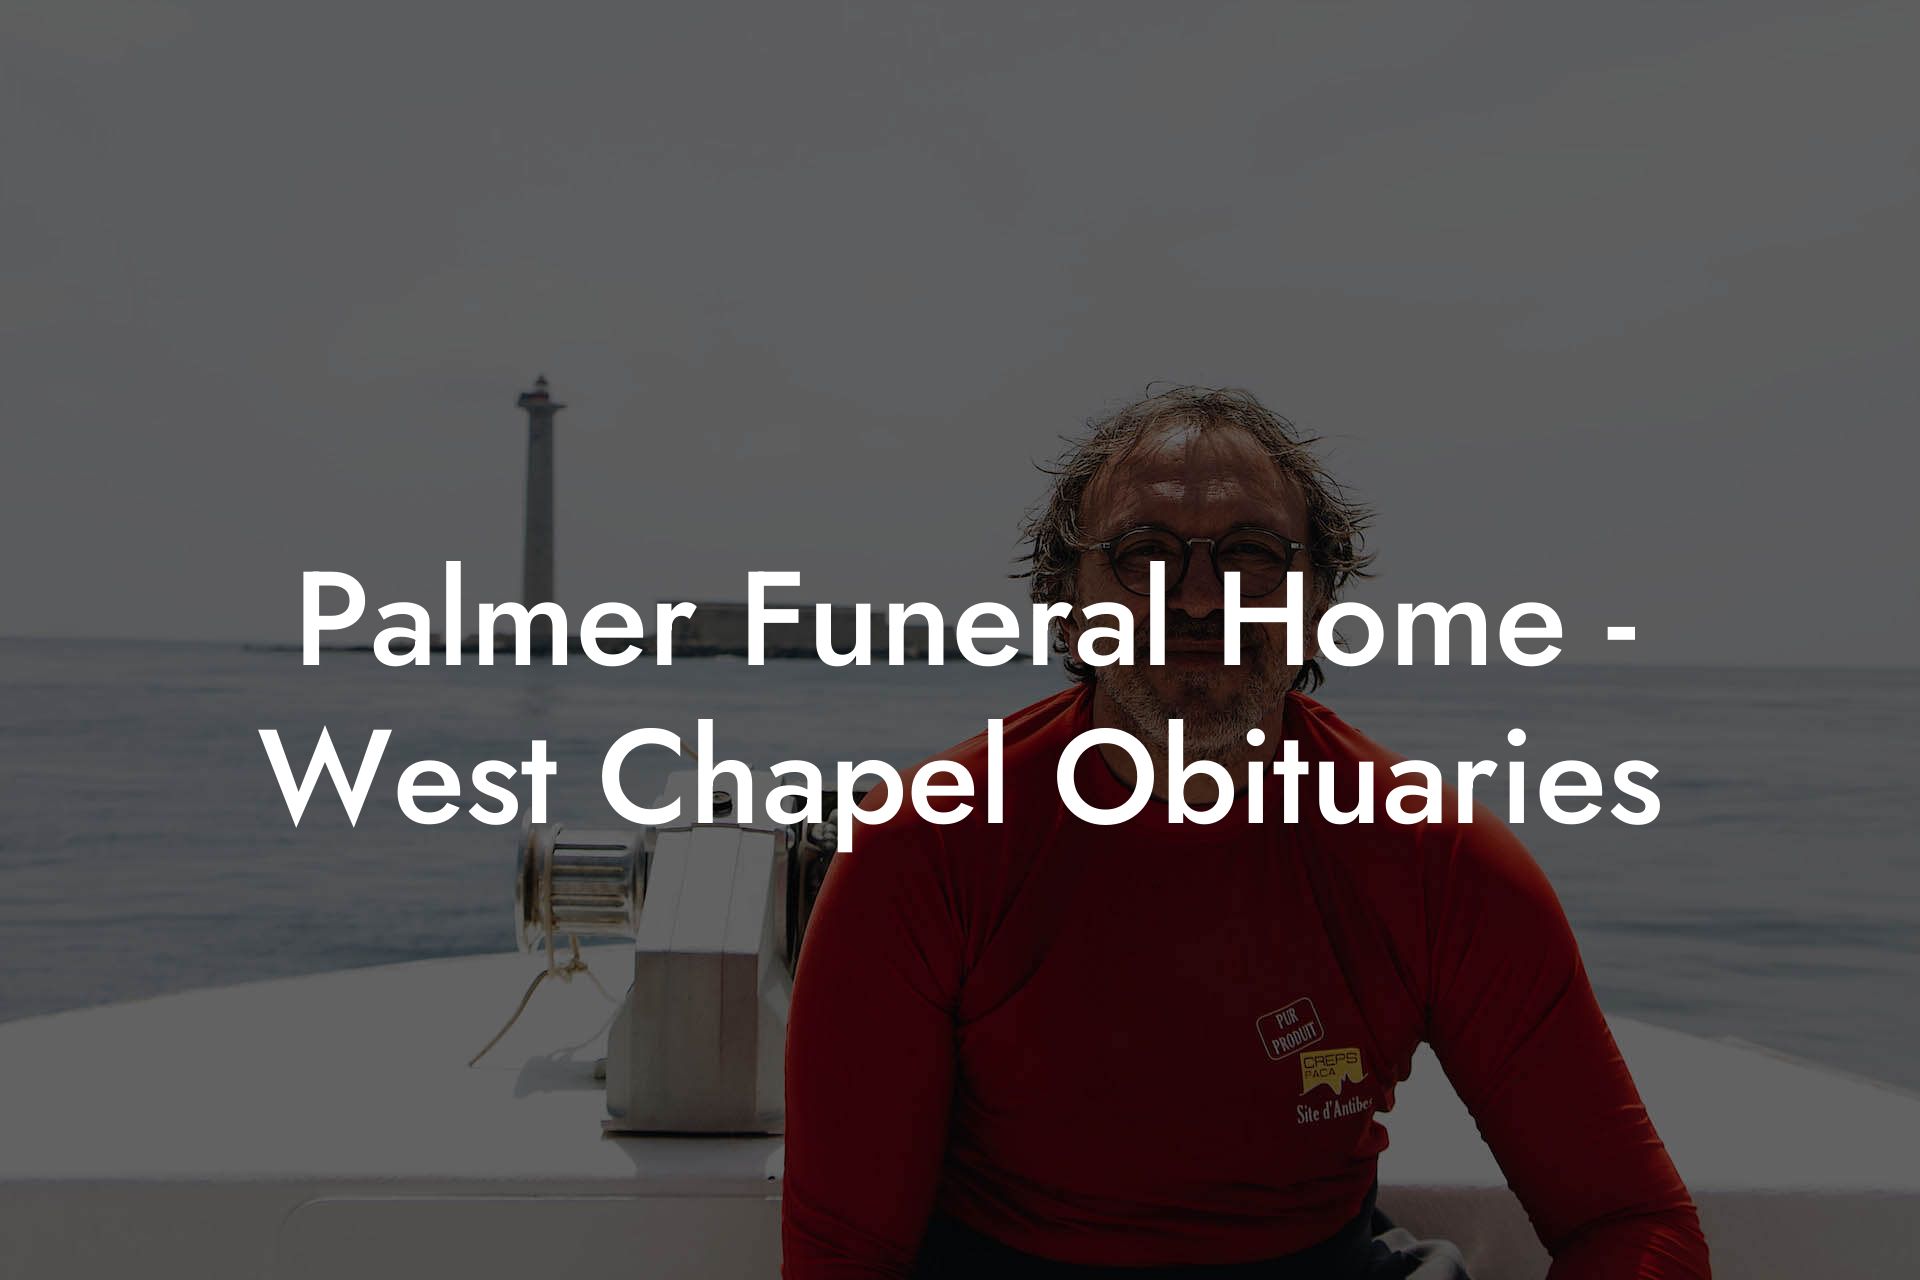 Palmer Funeral Home - West Chapel Obituaries